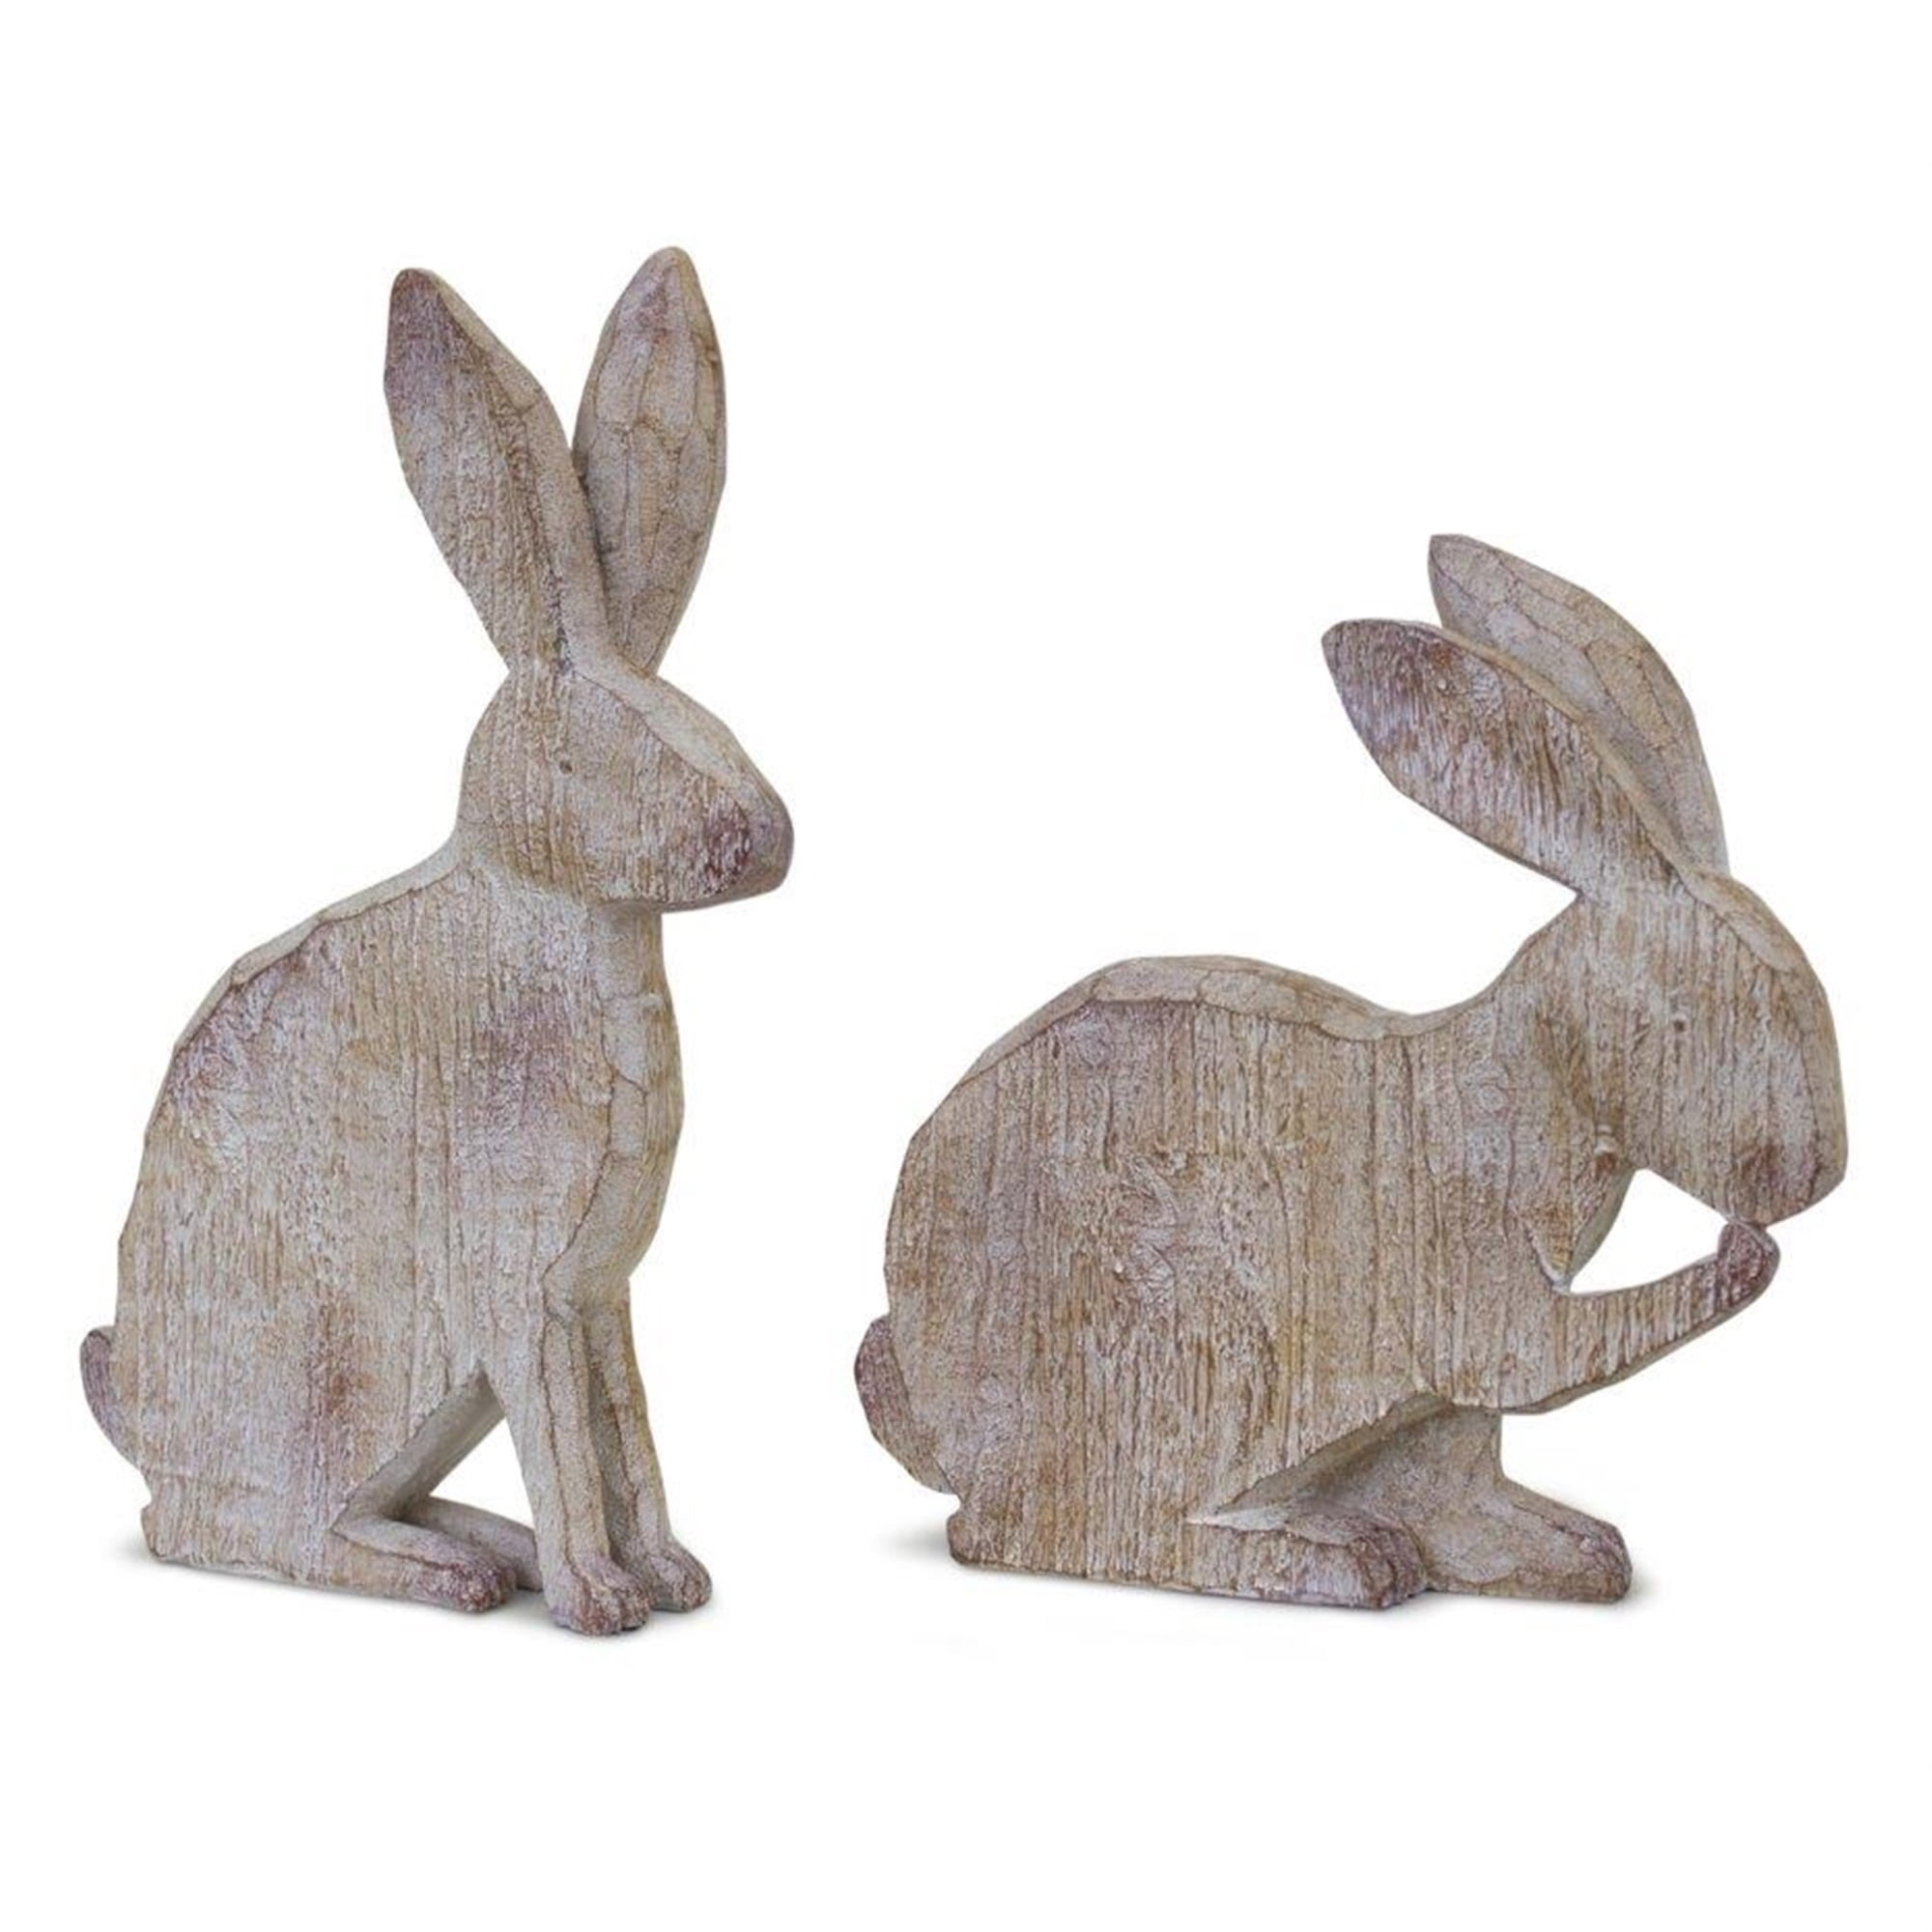 Bunny (Set of 2) 9"L x 9"H, 7"L x 11.75"H Resin